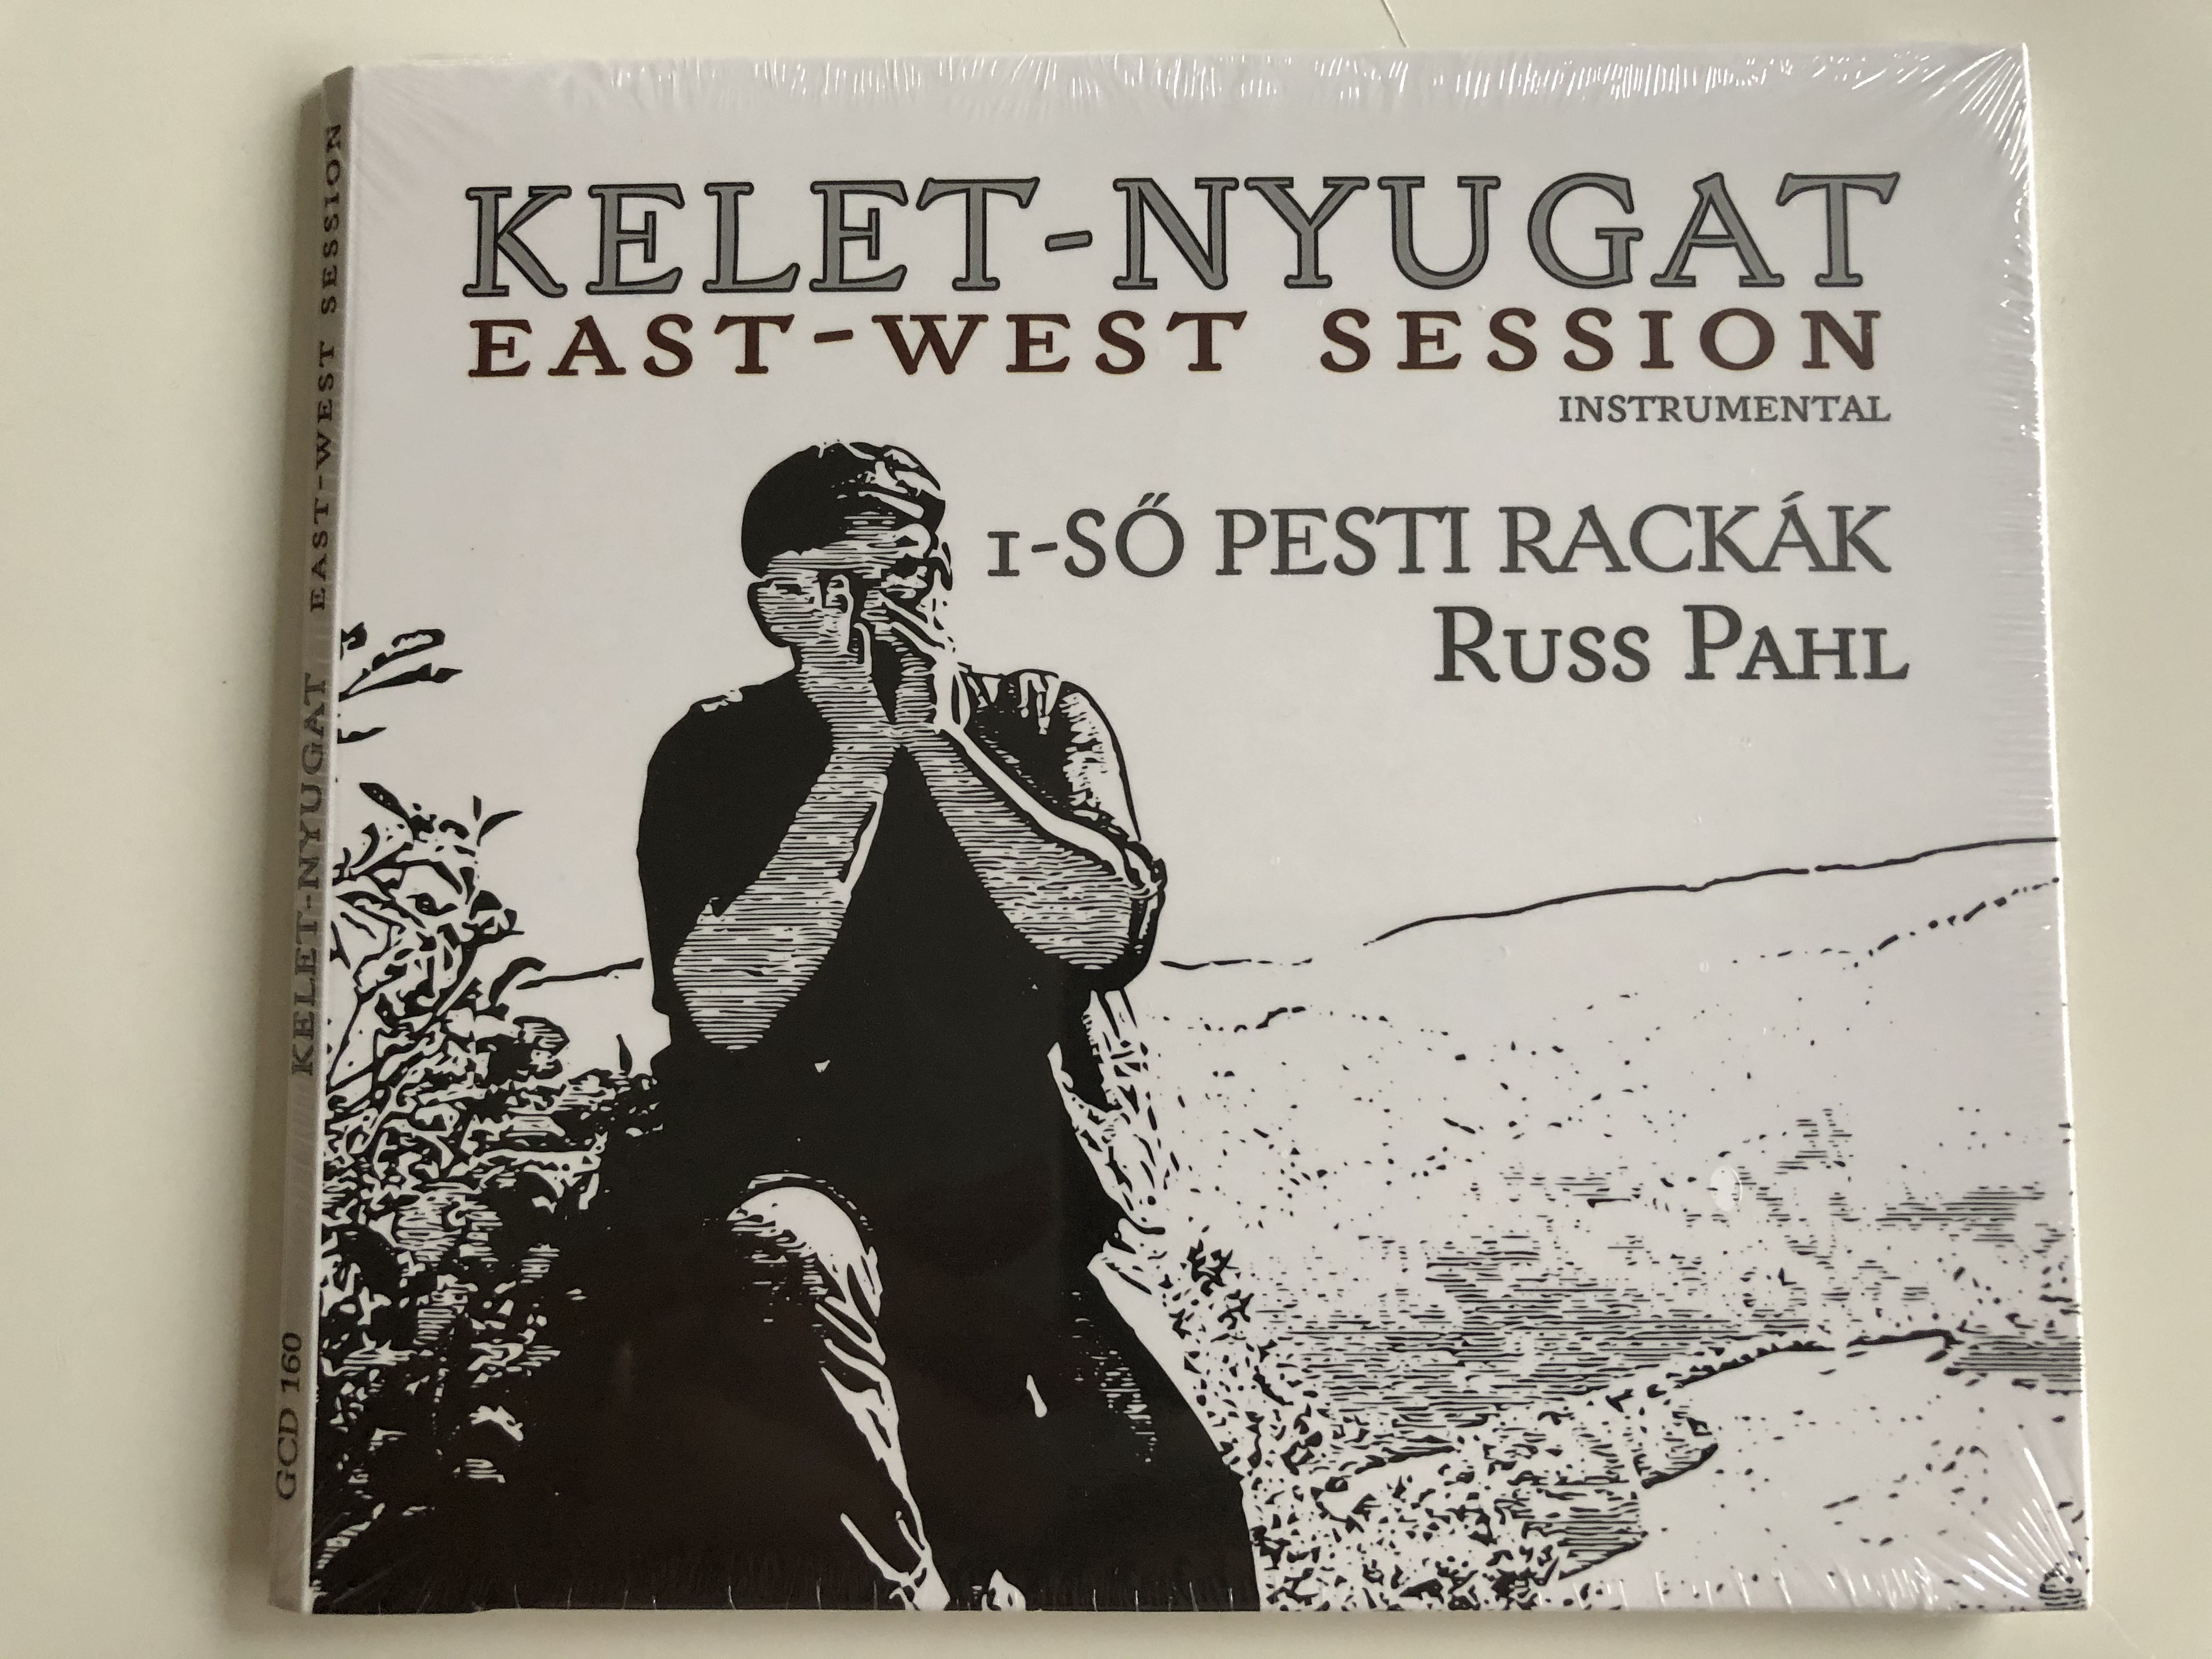 kelet-nyugat-east-west-session-instrumental-i-so-pesti-rackak-russ-pahl-gryllus-audio-cd-2015-gcd-160-1-.jpg